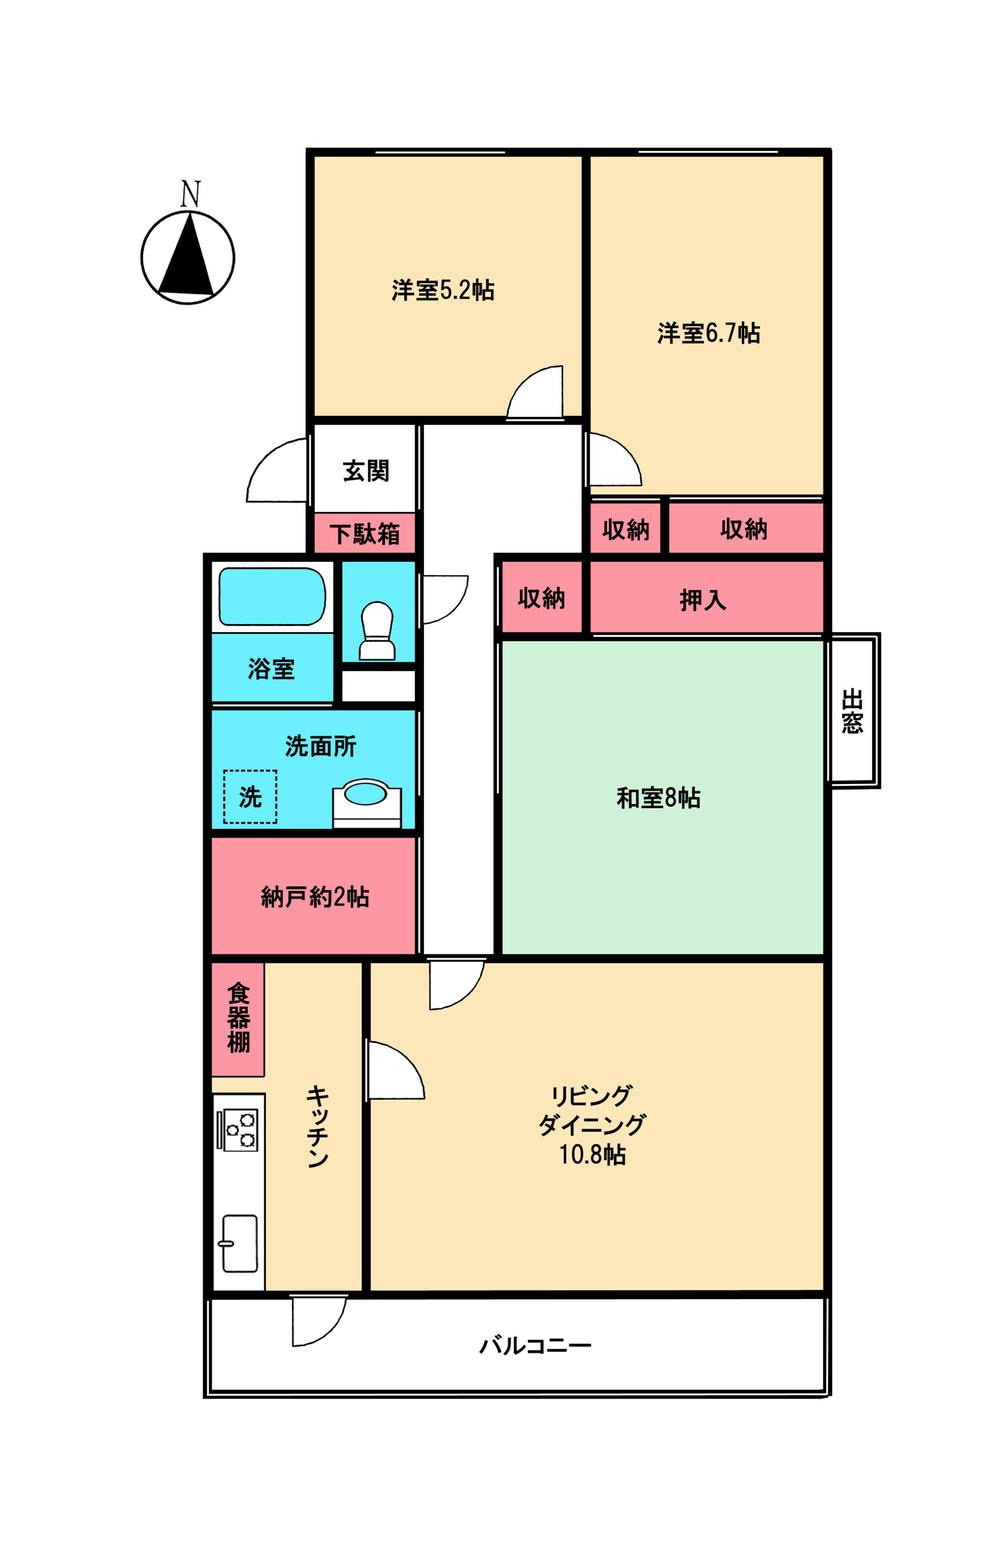 Floor plan. 3LDK + S (storeroom), Price 5.8 million yen, Occupied area 81.87 sq m , Balcony area 8.97 sq m